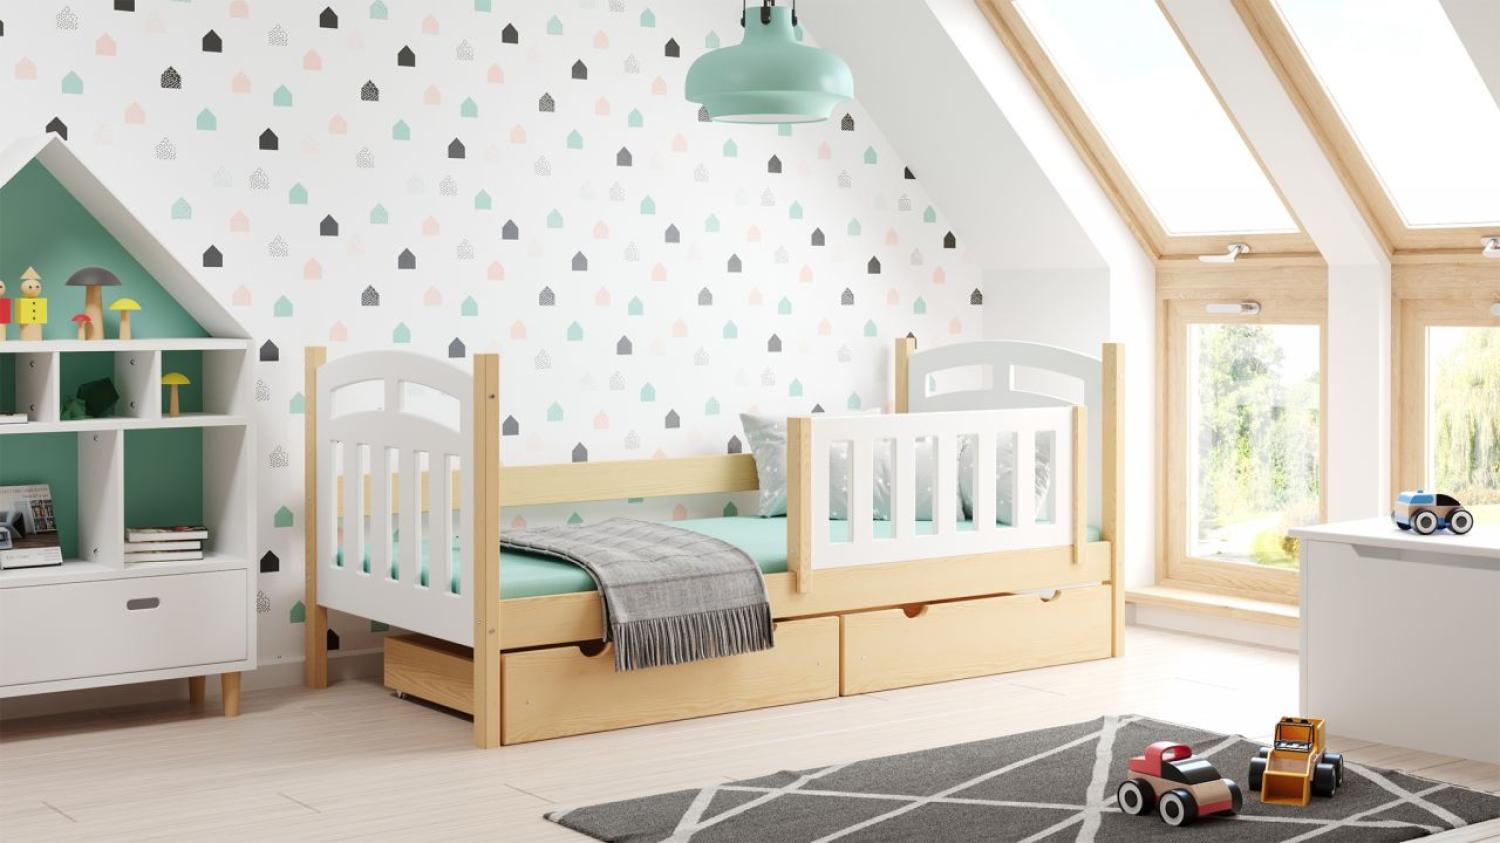 Kinderbettenwelt 'Susi' Kinderbett 80x160 cm, weiß/natur, Kiefer massiv, inkl. Lattenrost und zwei Schubladen Bild 1